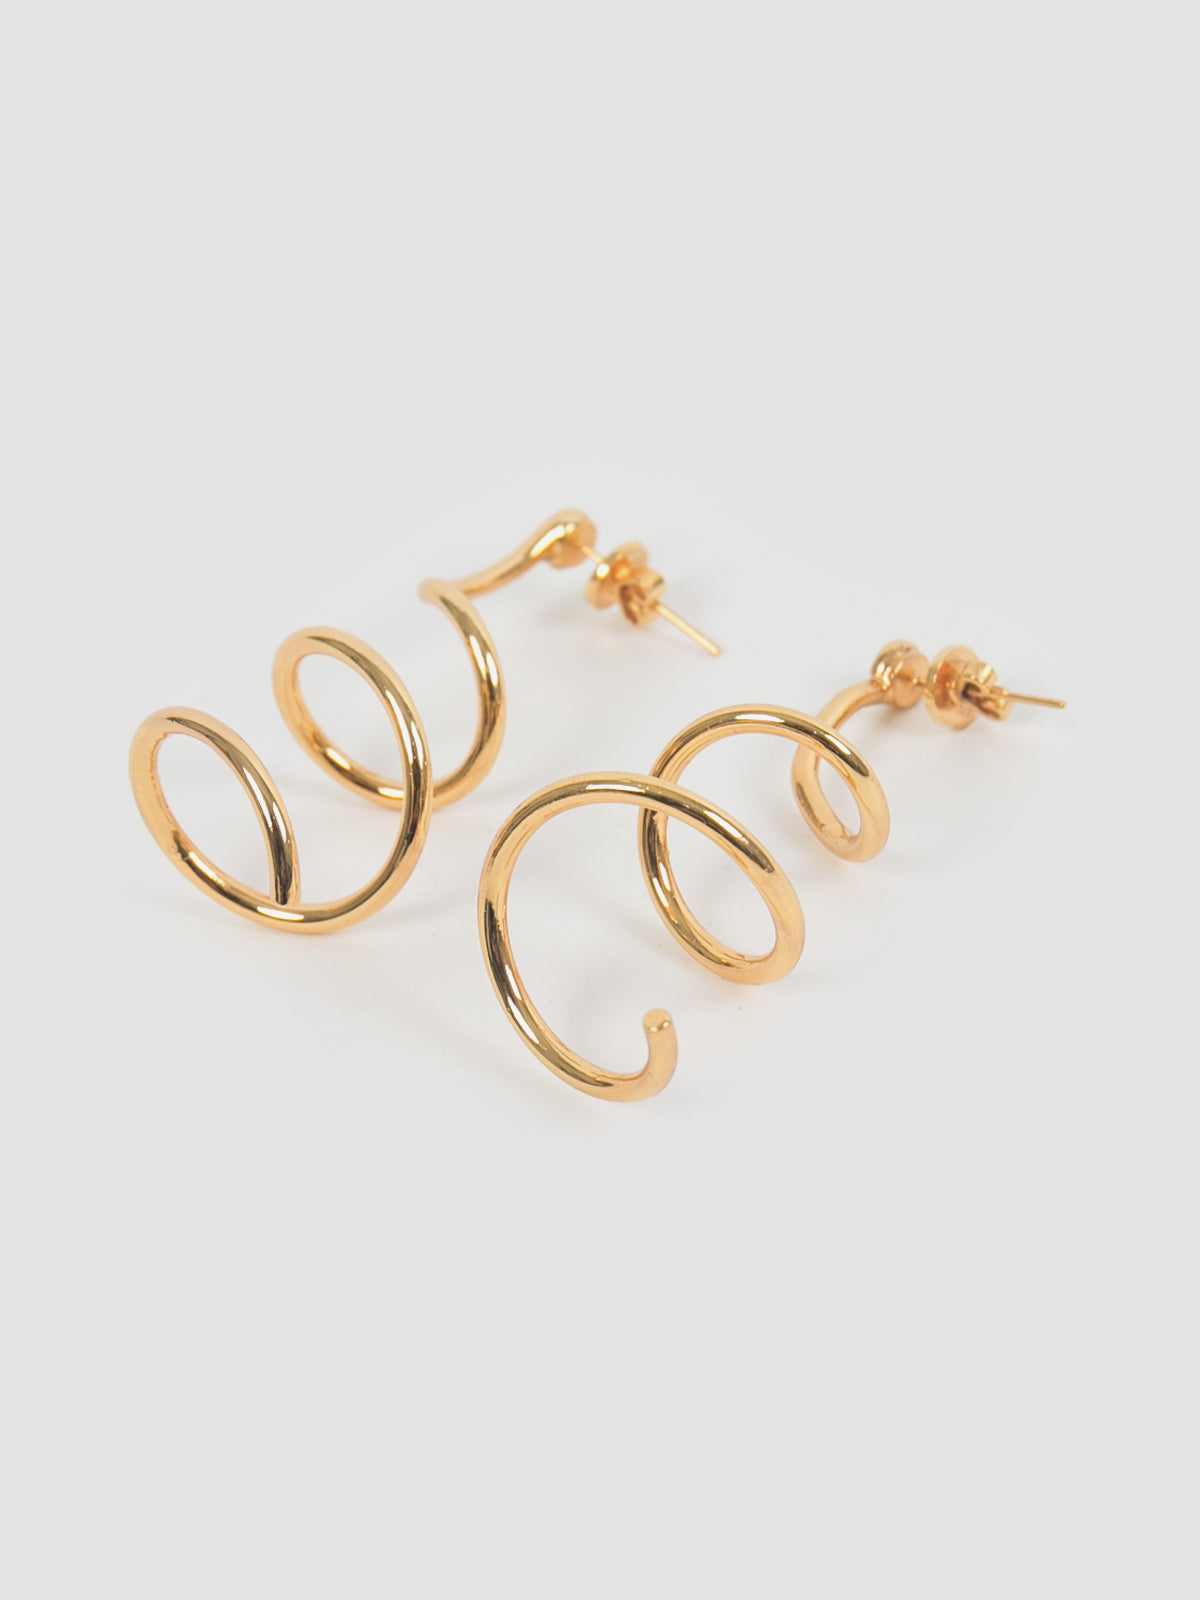 Syha gold earrings